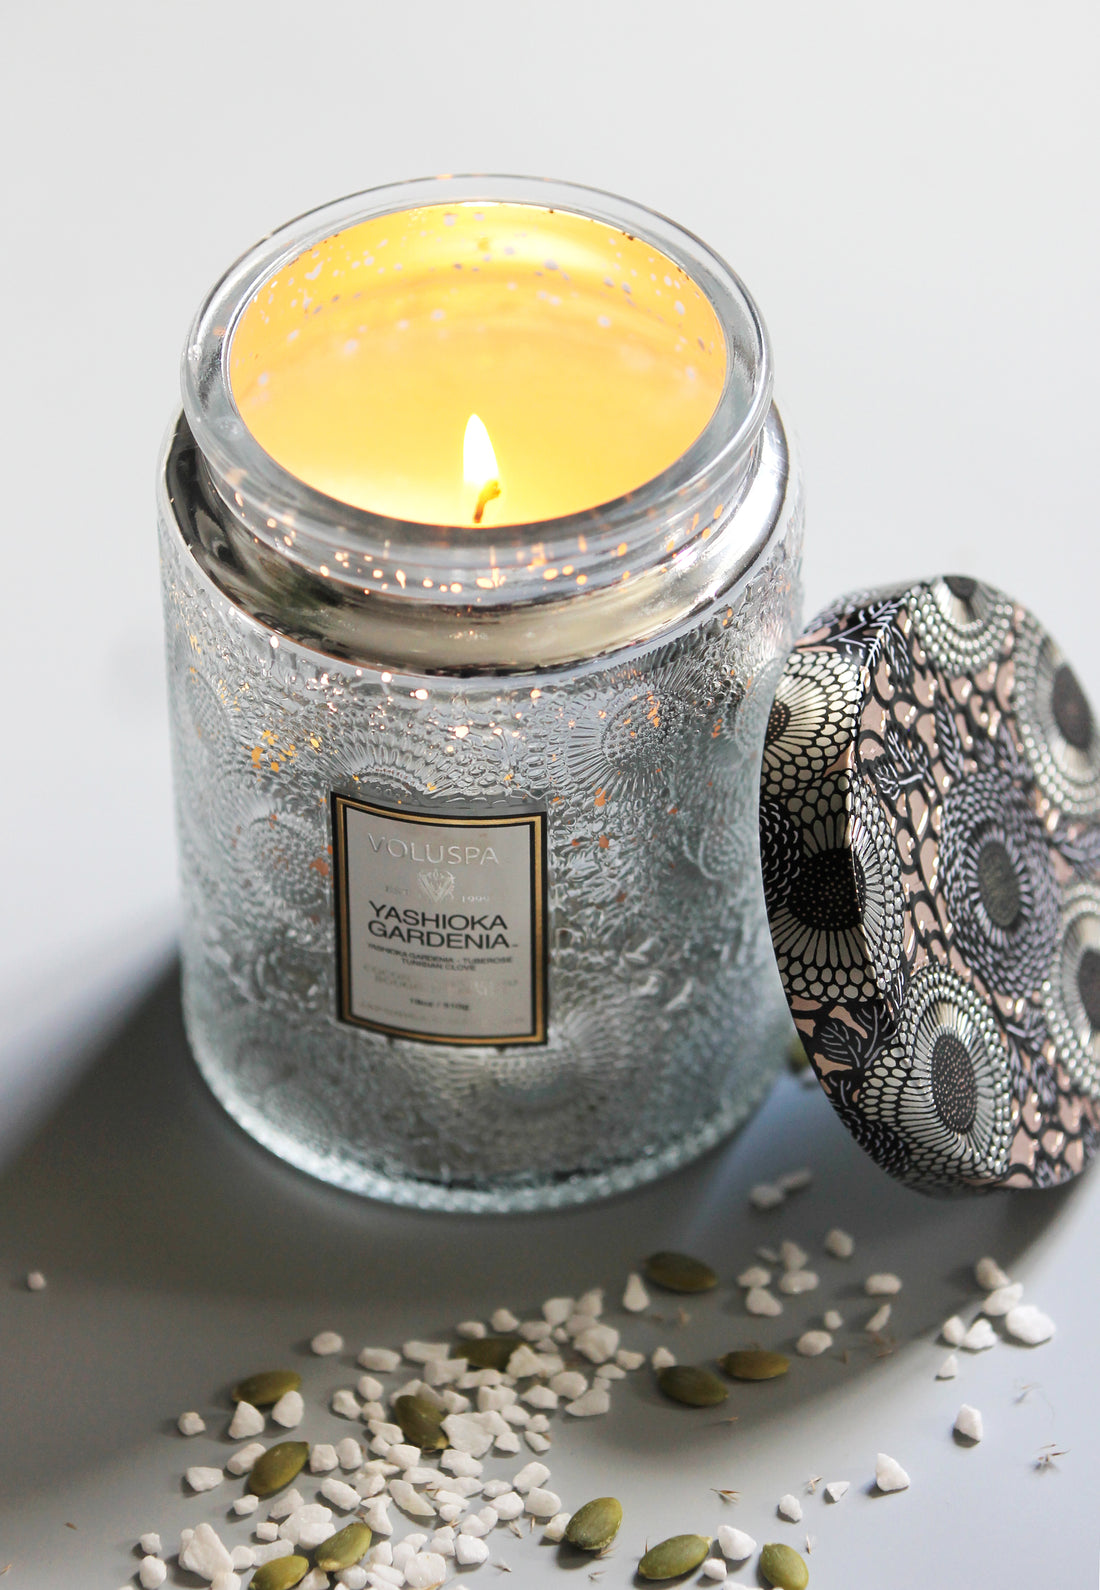 Gardenia Jar Candle